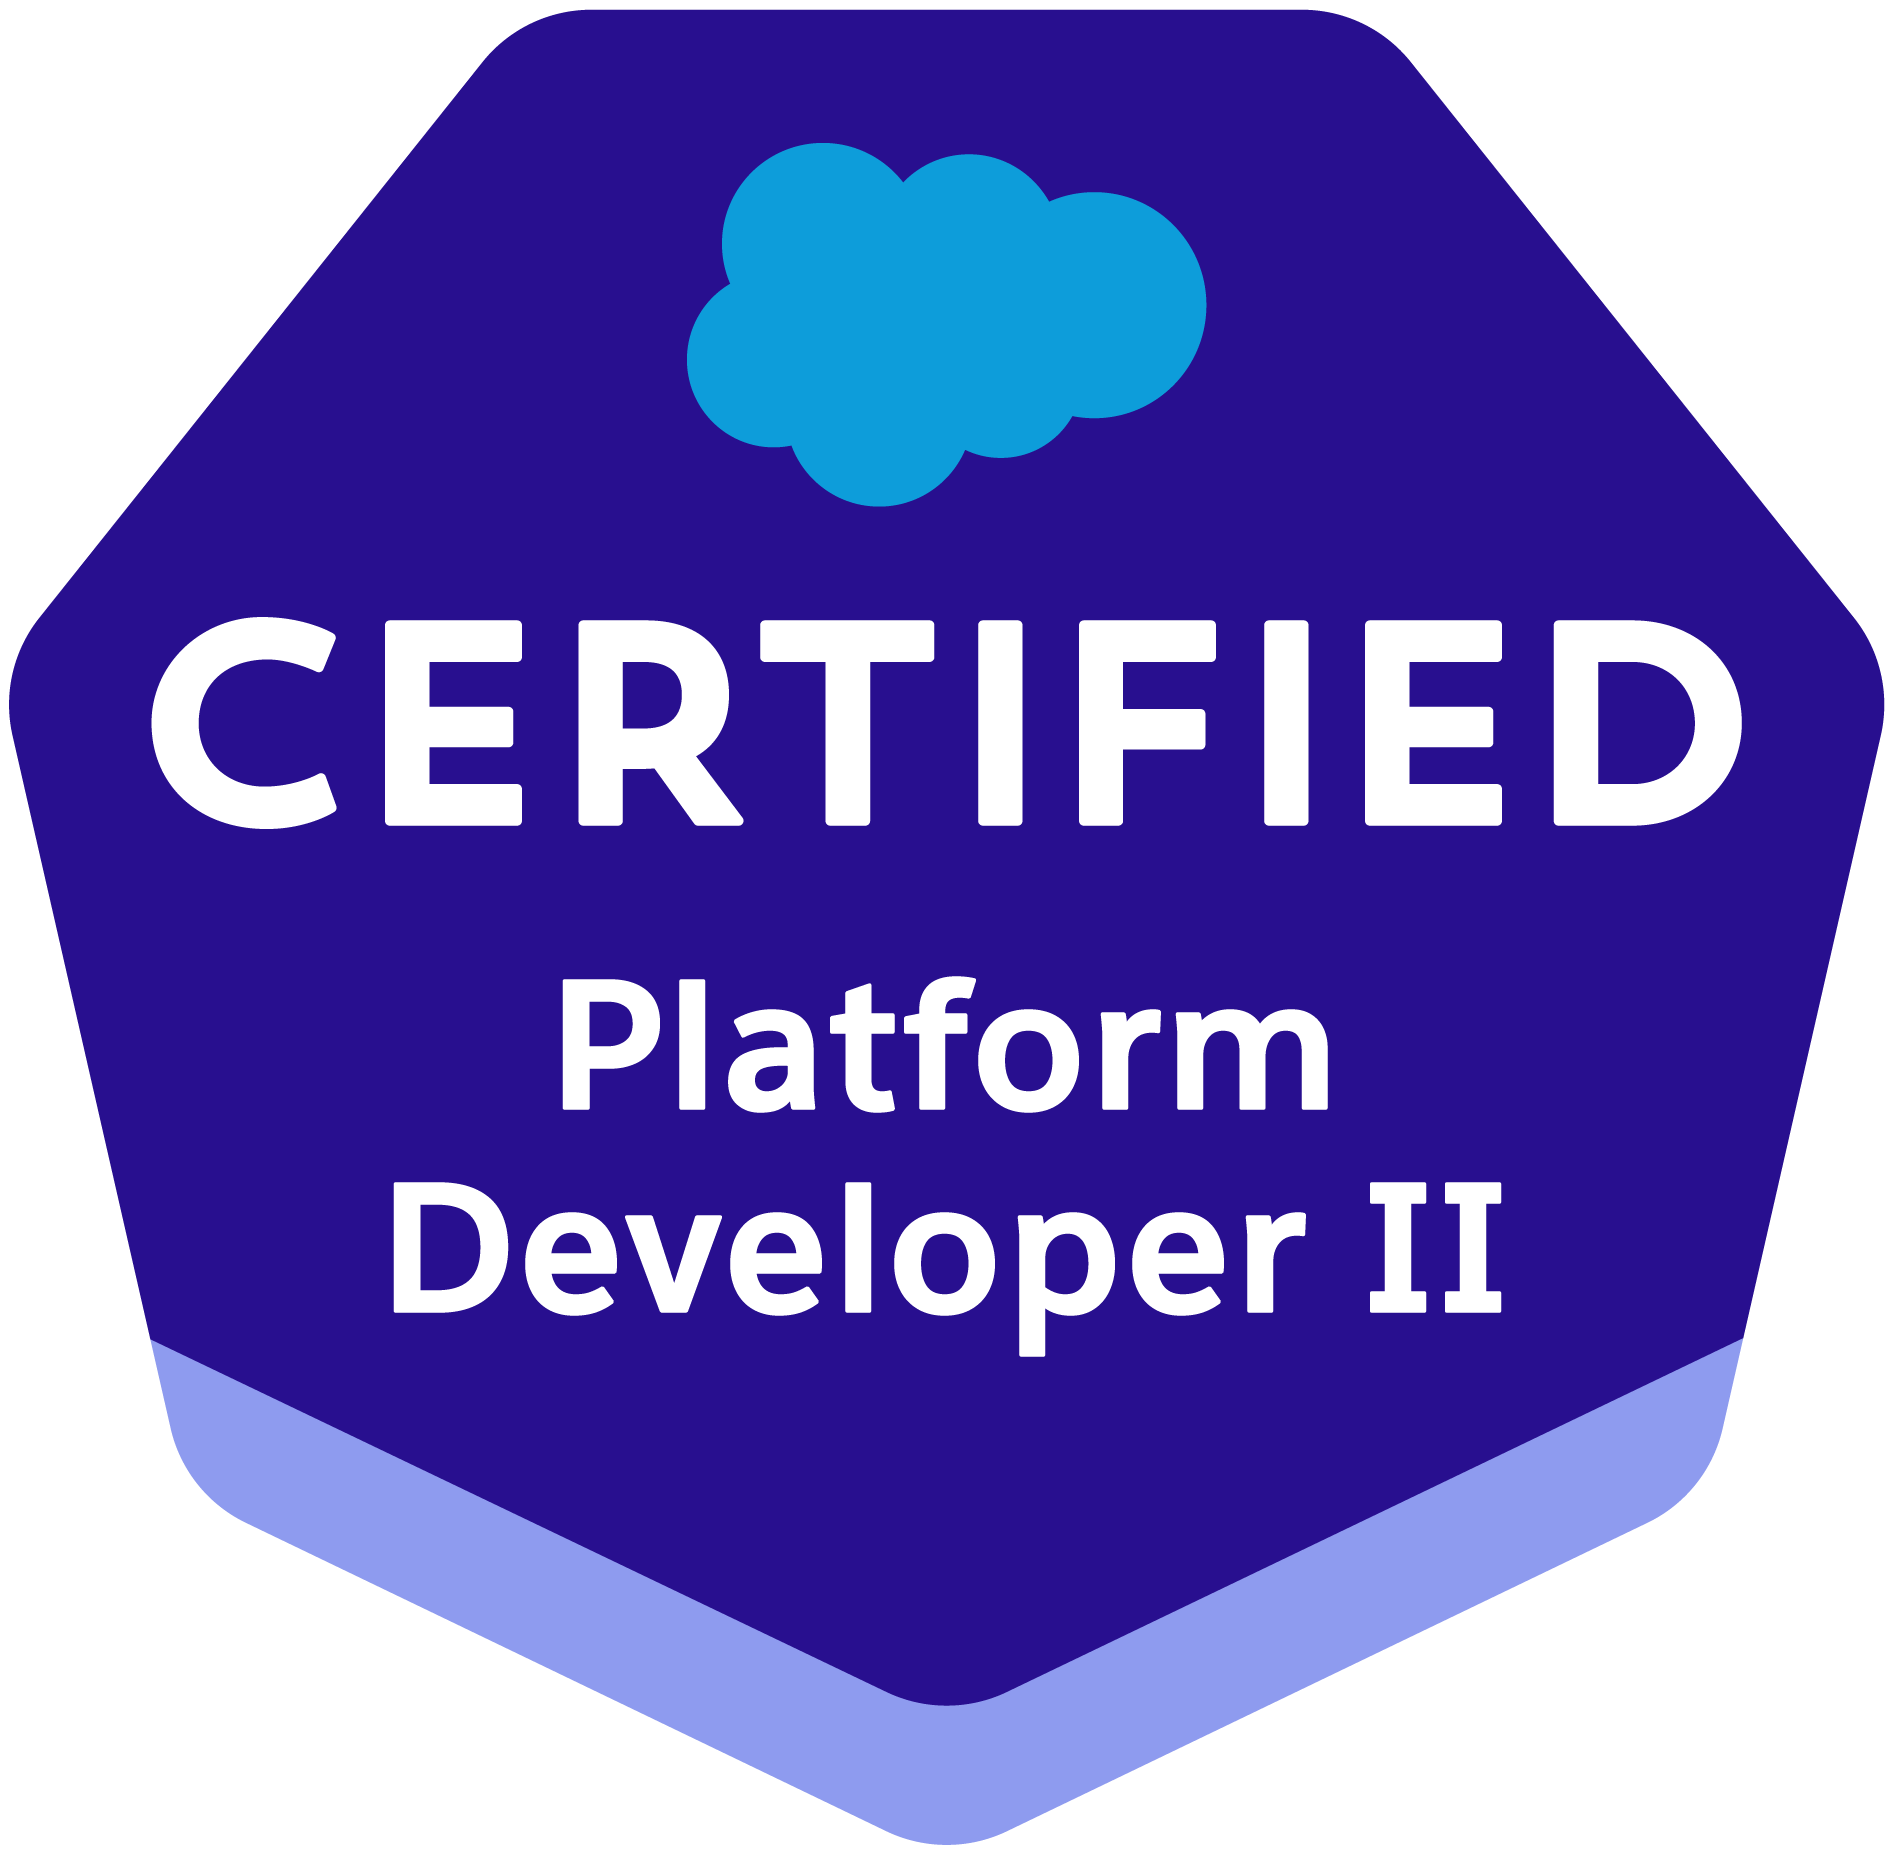 Platform Developer II